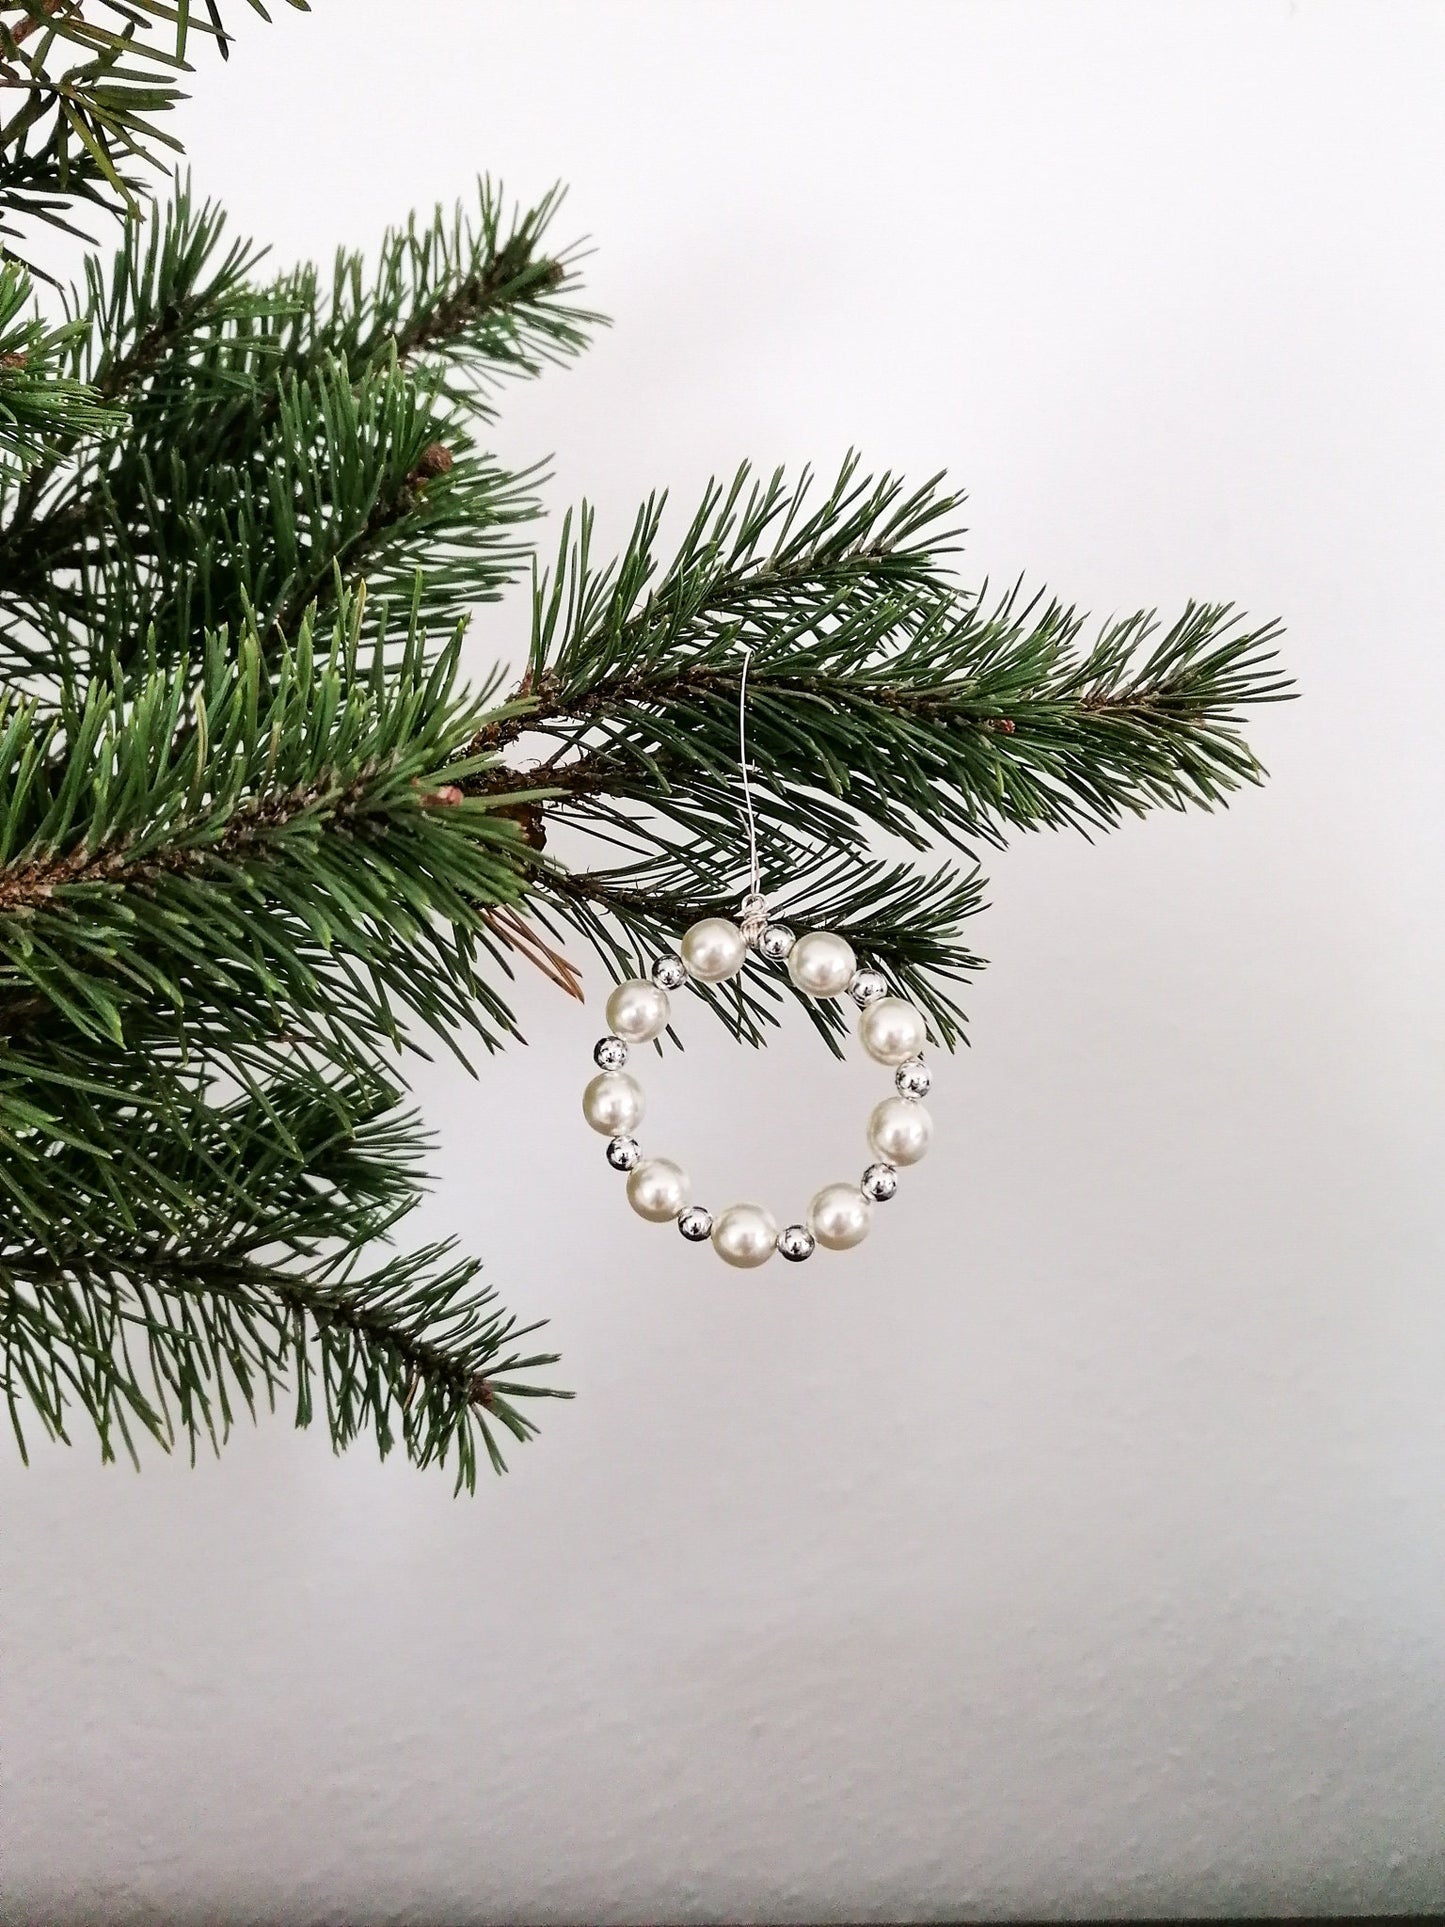 Pearl wreath christmas ornaments